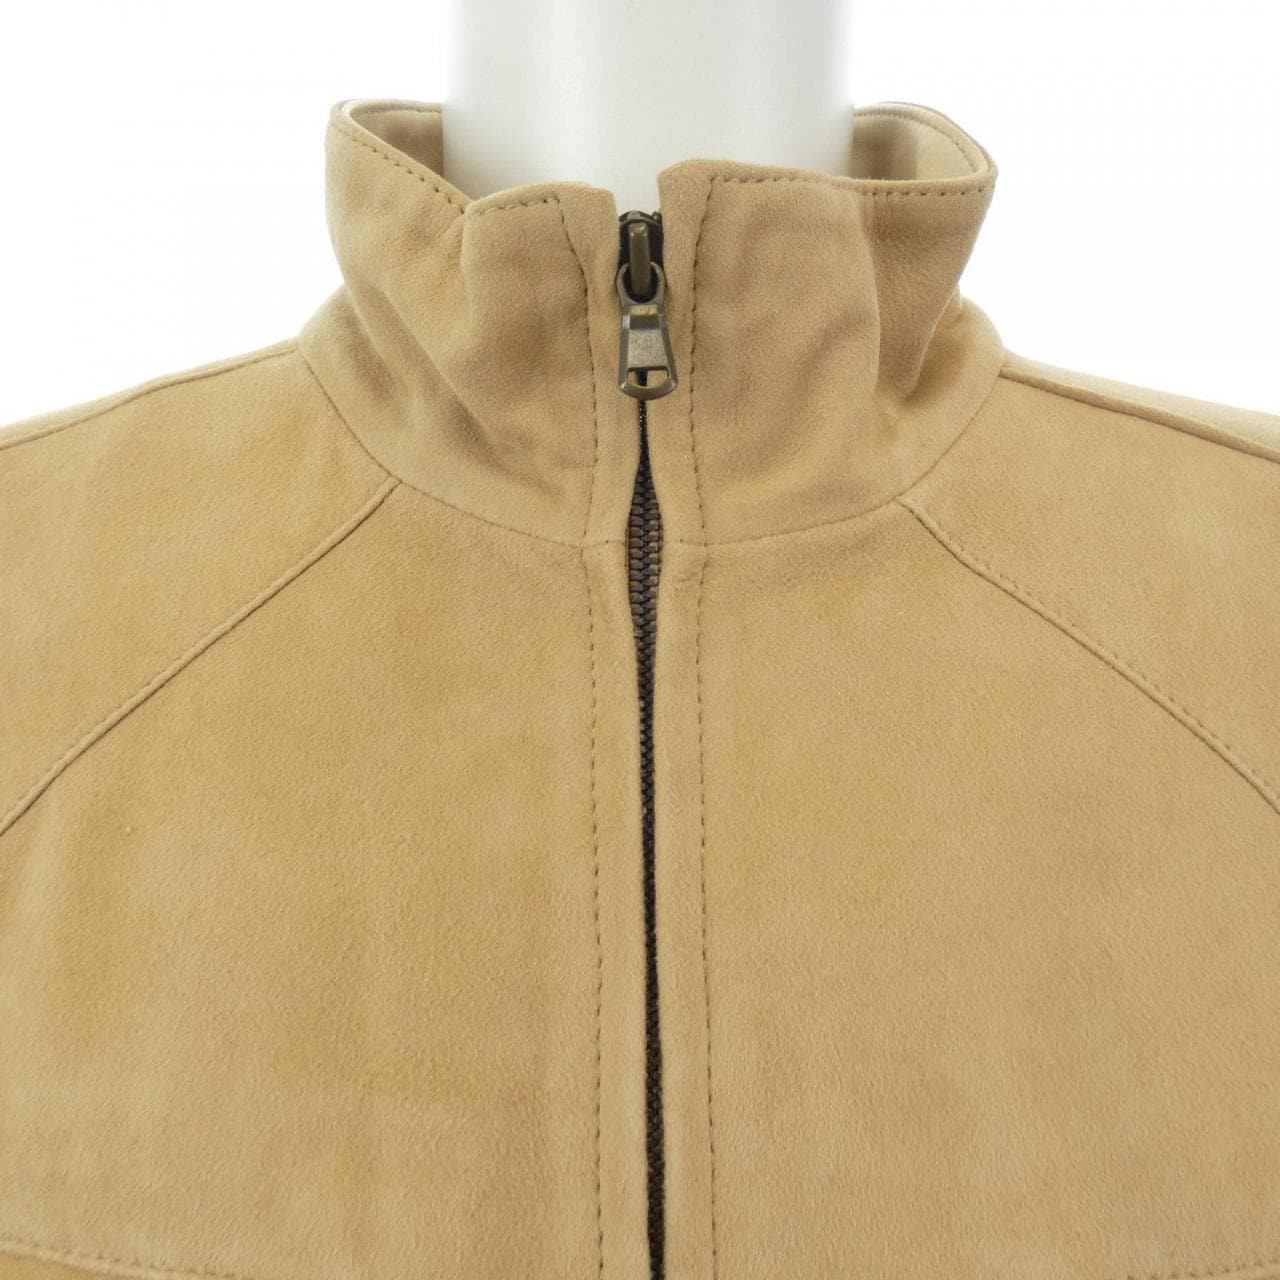 BRUNELLO CUCINELLI CUCINELLI leather jacket